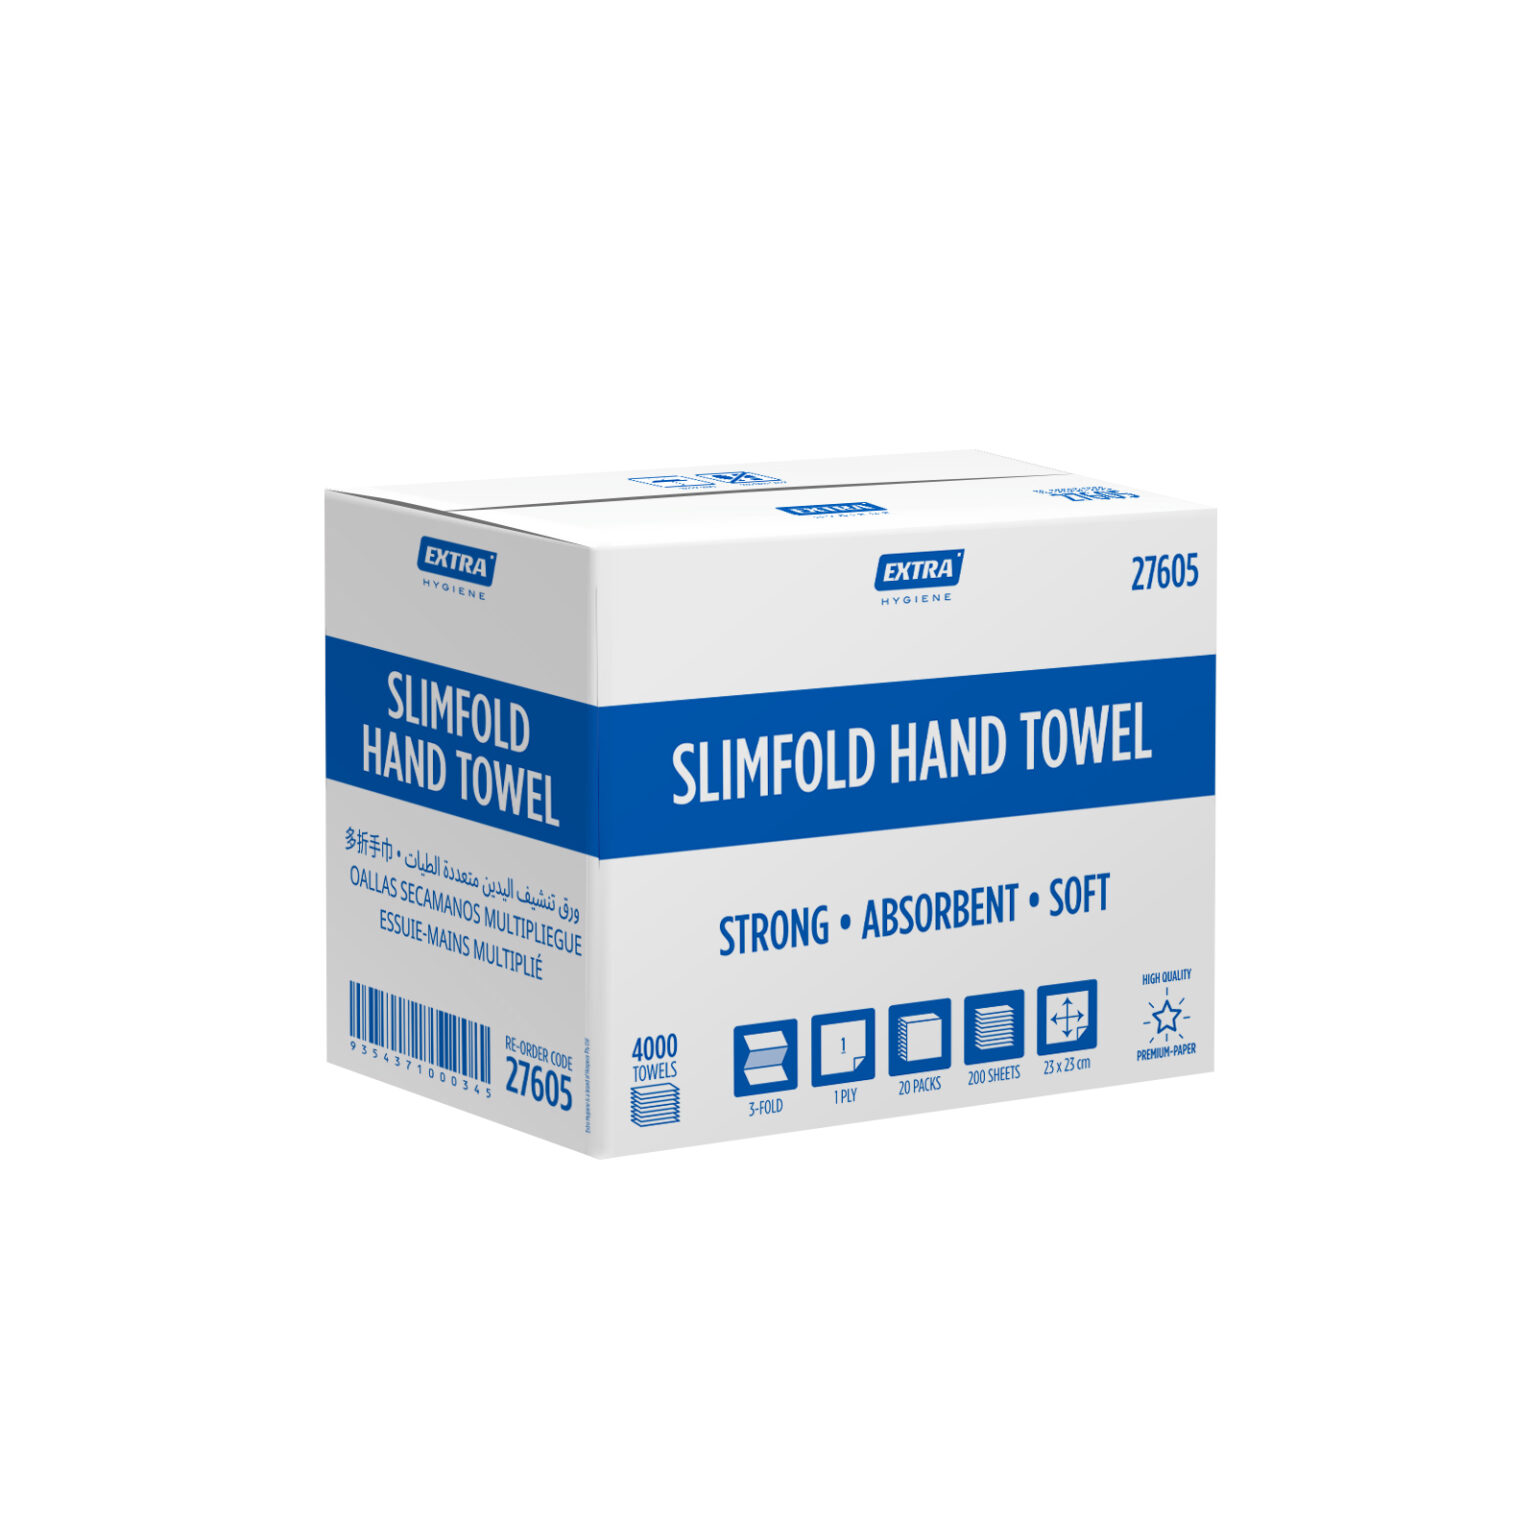 276045-Slimfold-hand-towel-1600x1600